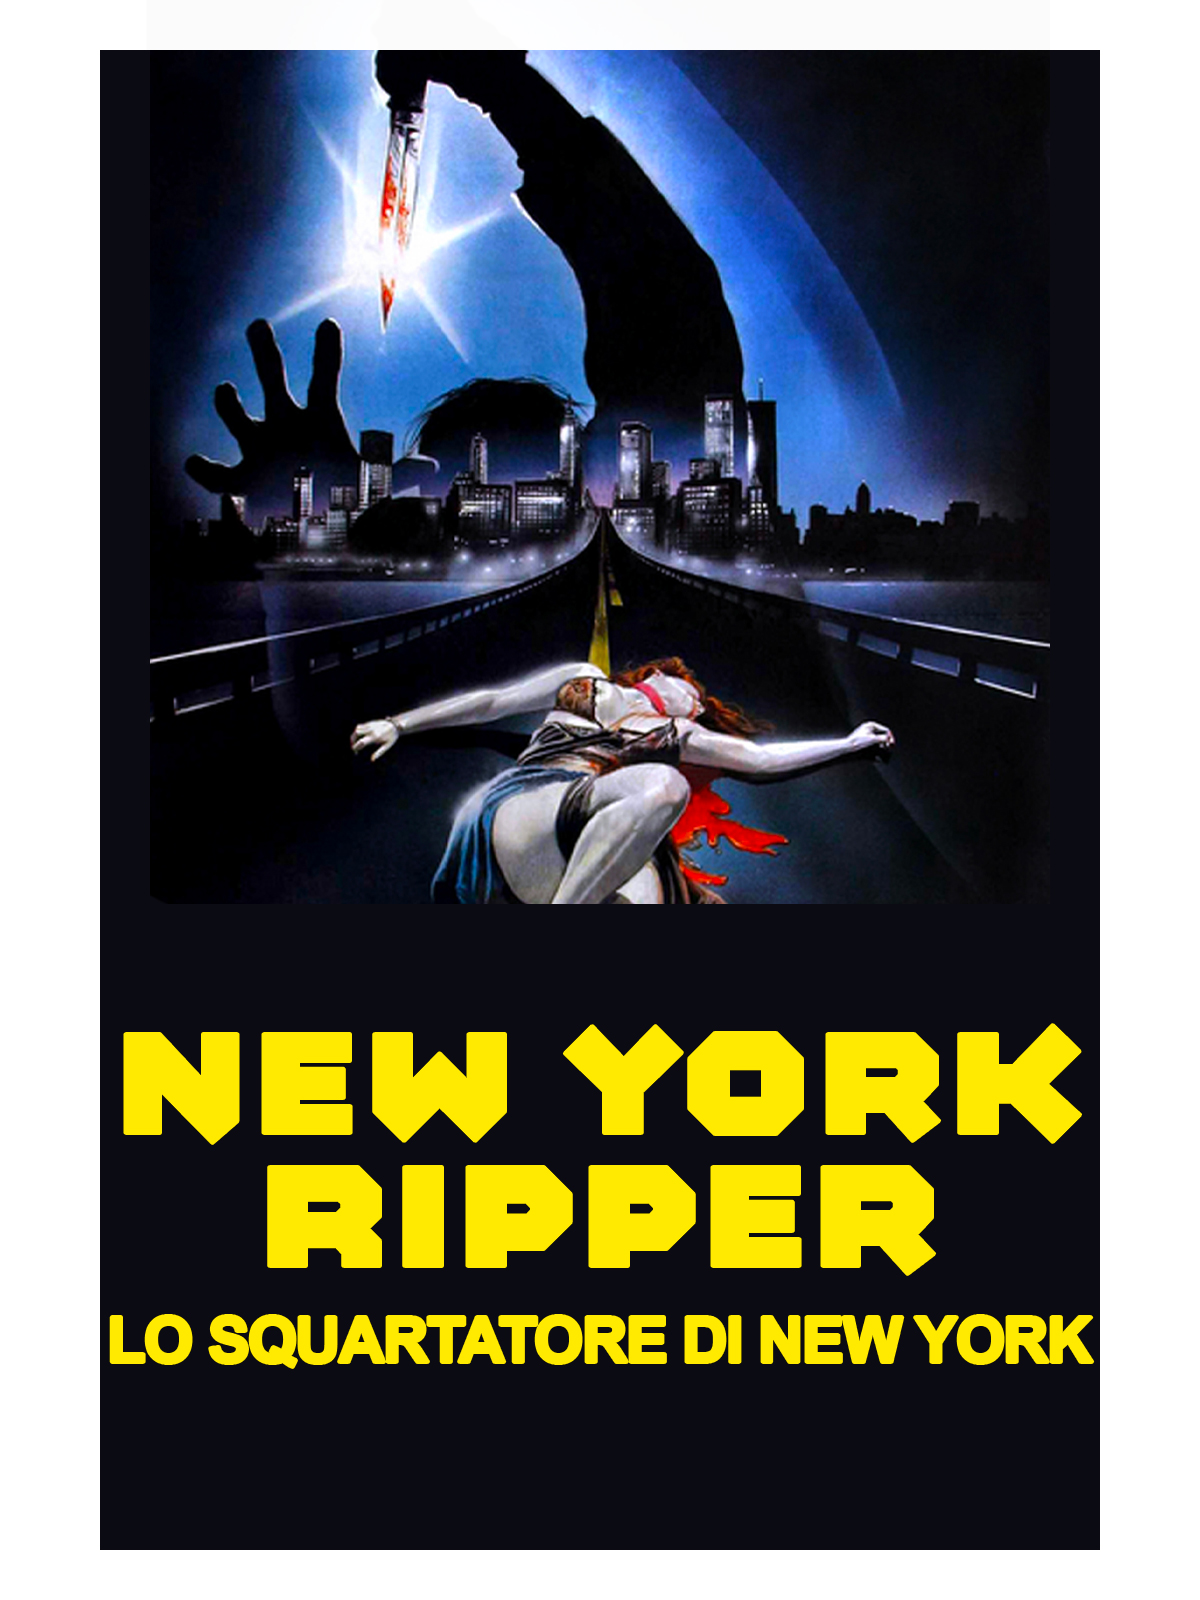 The New York ripper